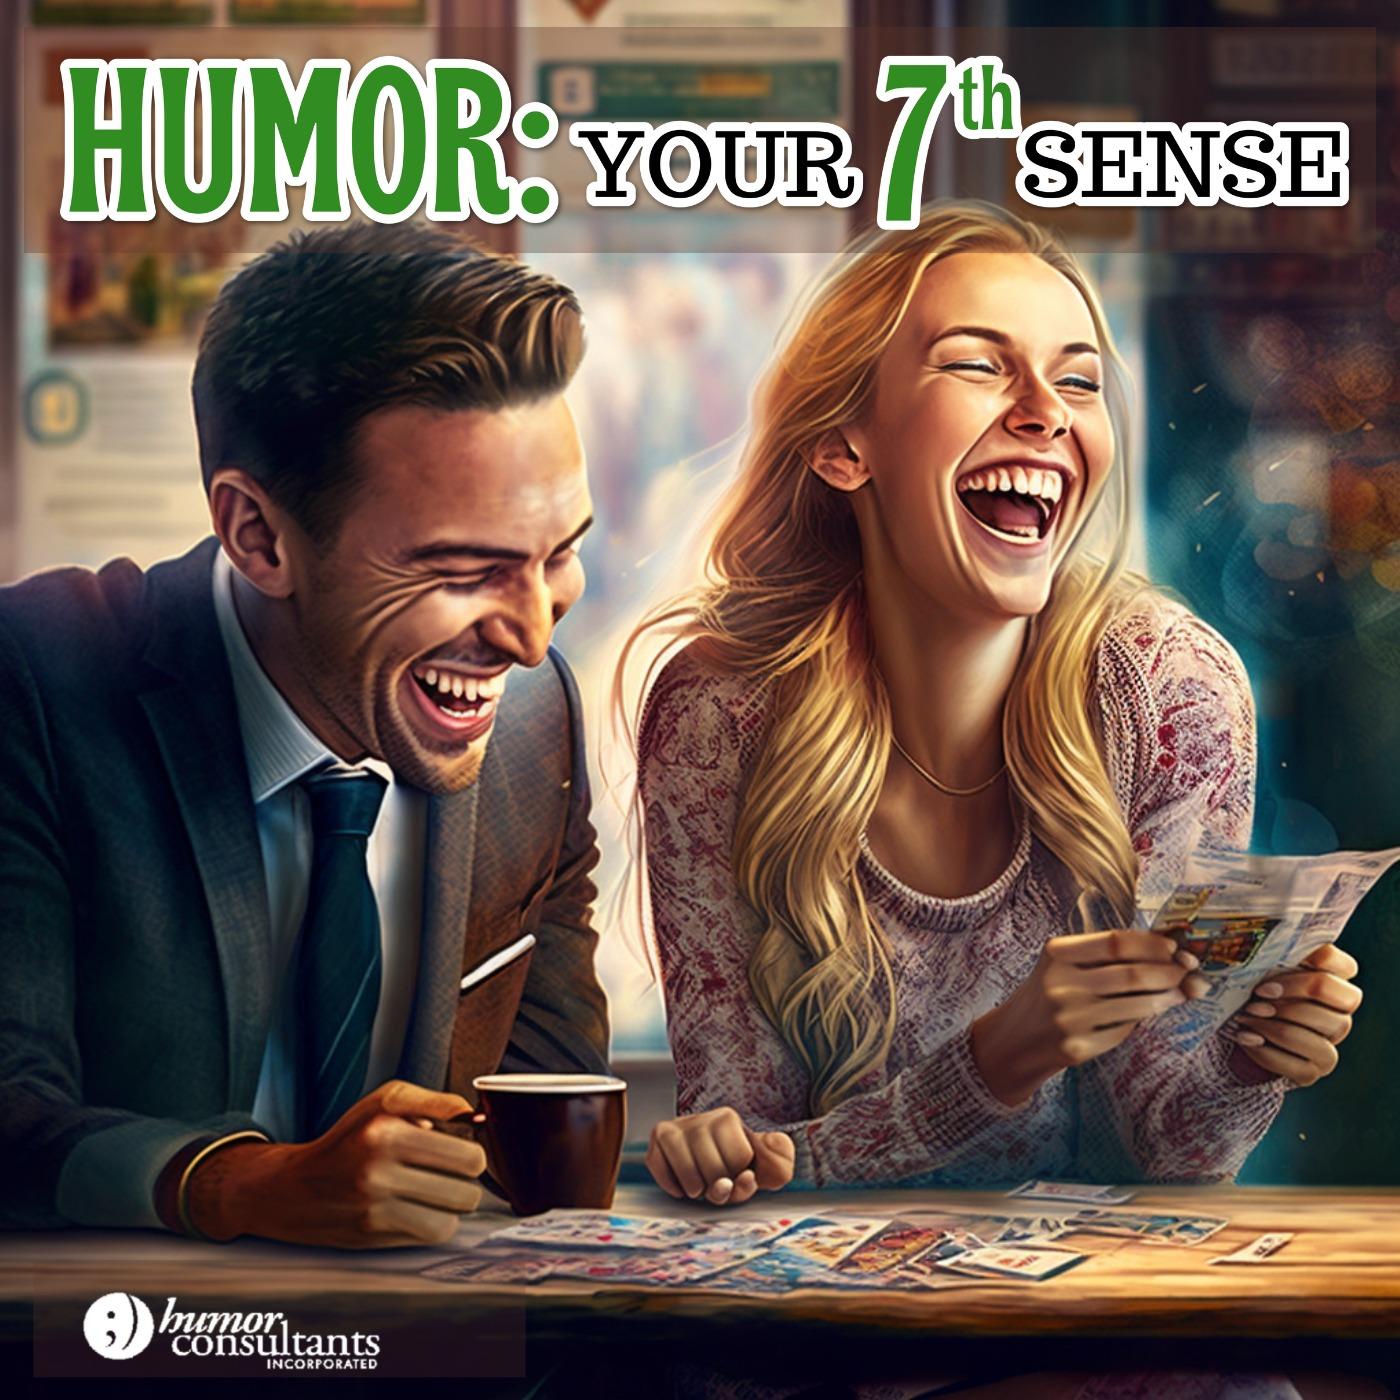 Humor:  Your 7th Sense